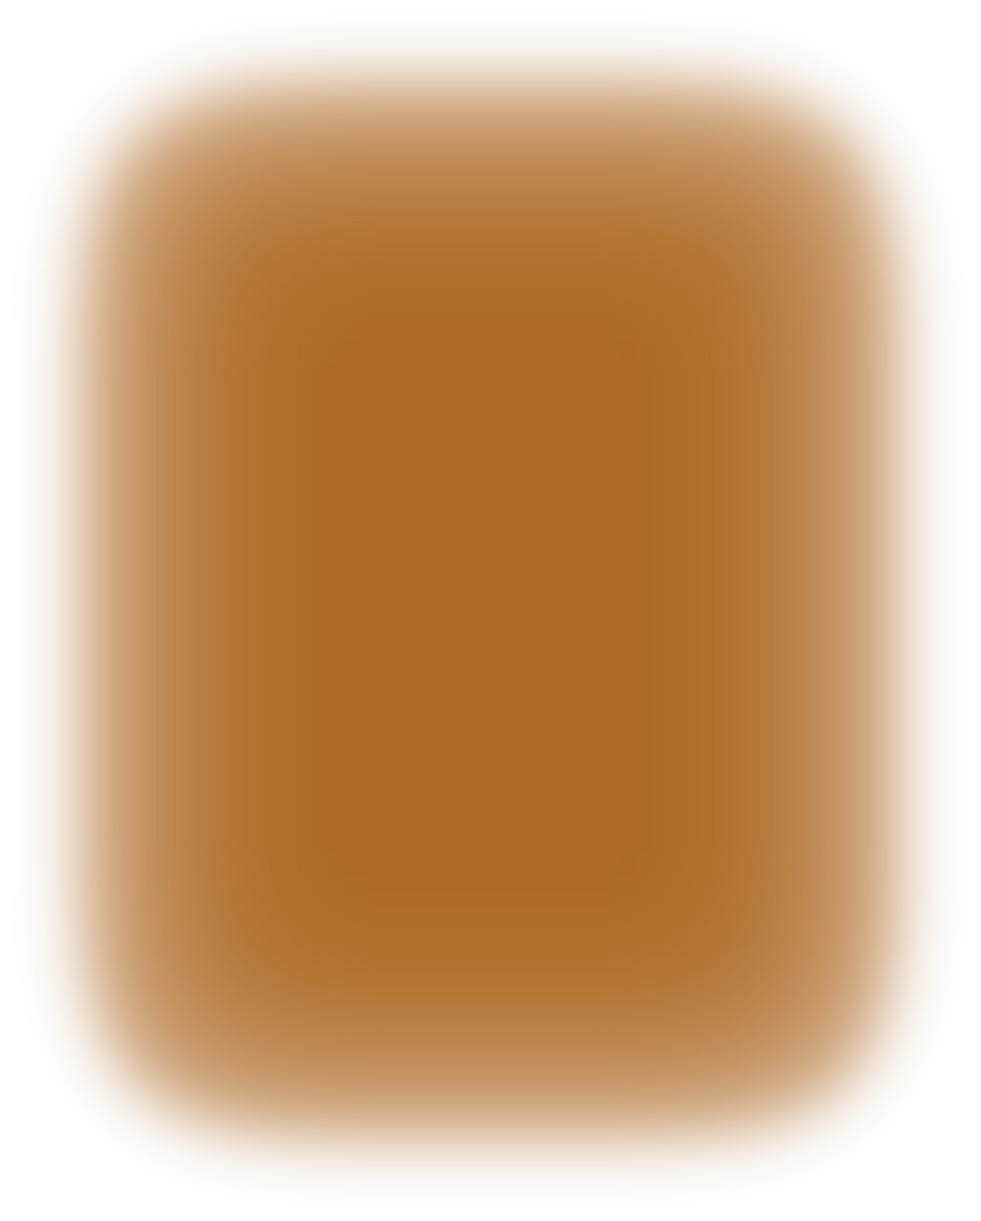 Brown Rectangle Gradient